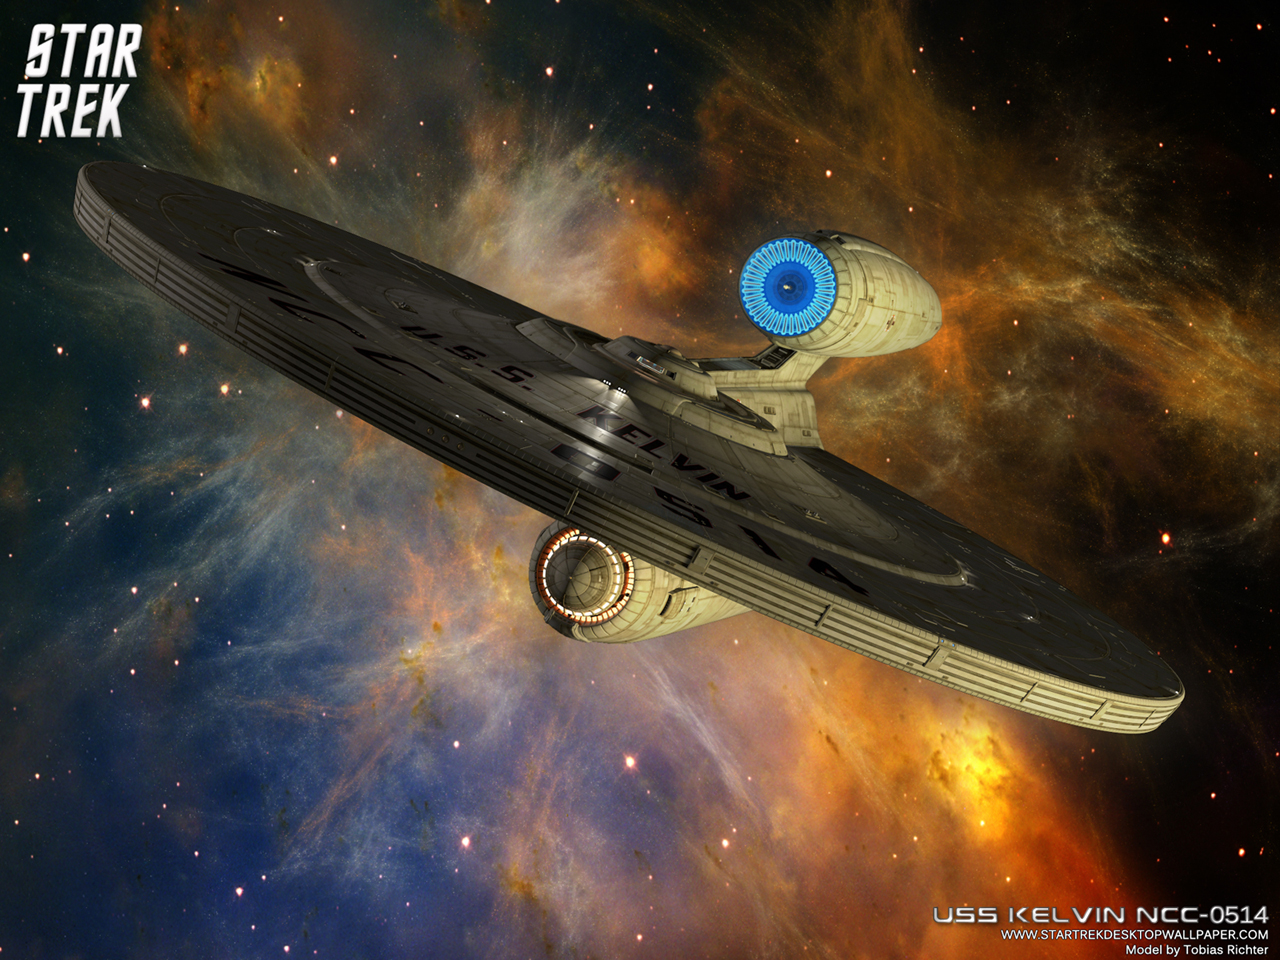 - Star Trek Federation Star Ship USS Kelvin NCC 0514 - free Star Trek computer desktop wallpaper, pictures, images.